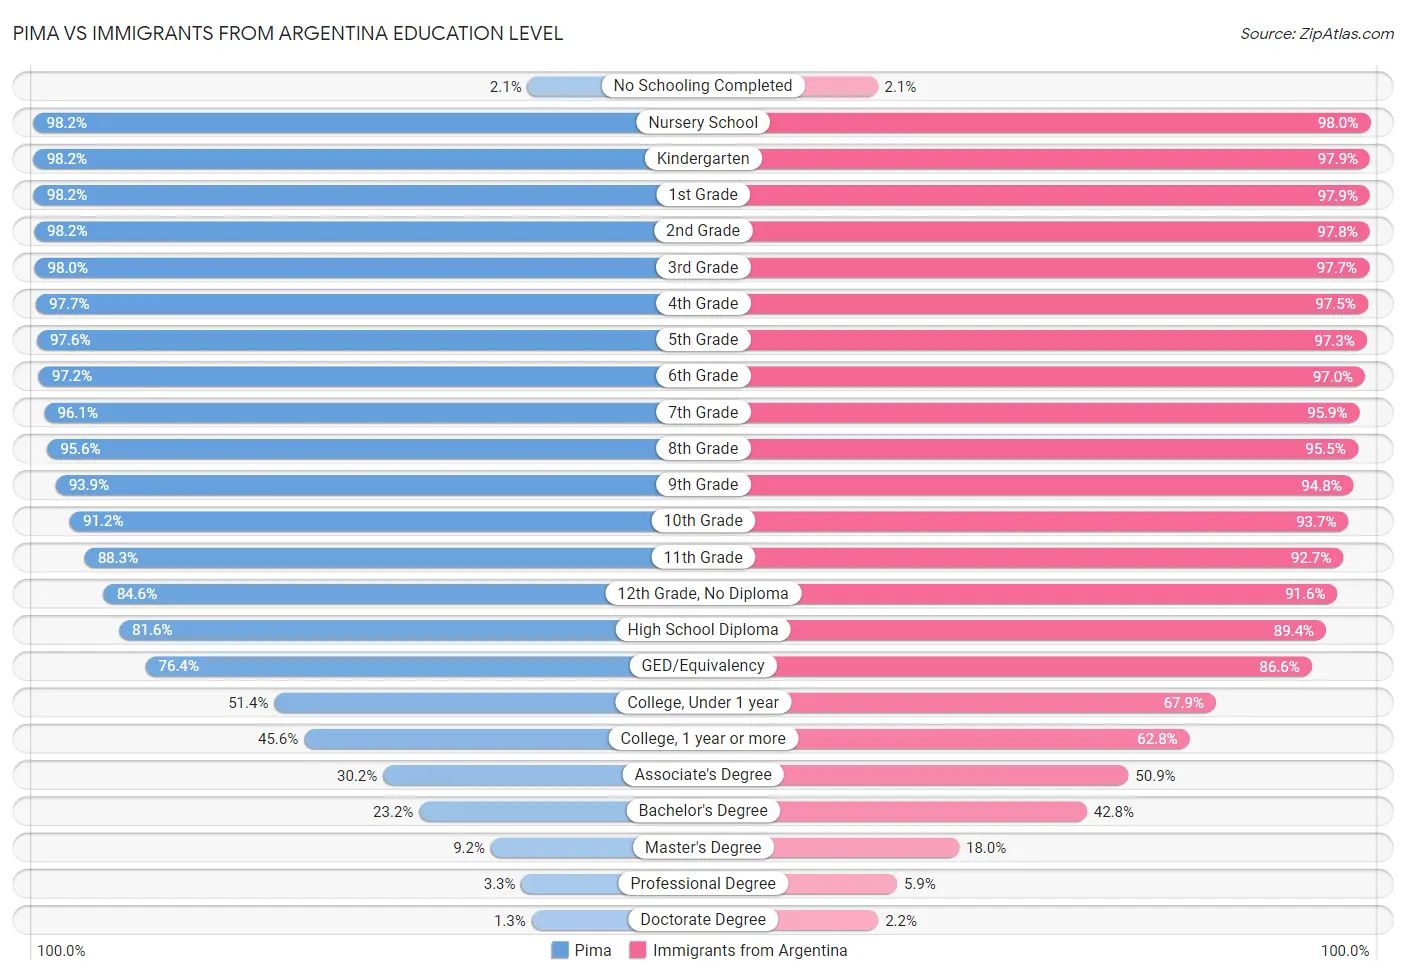 Pima vs Immigrants from Argentina Education Level